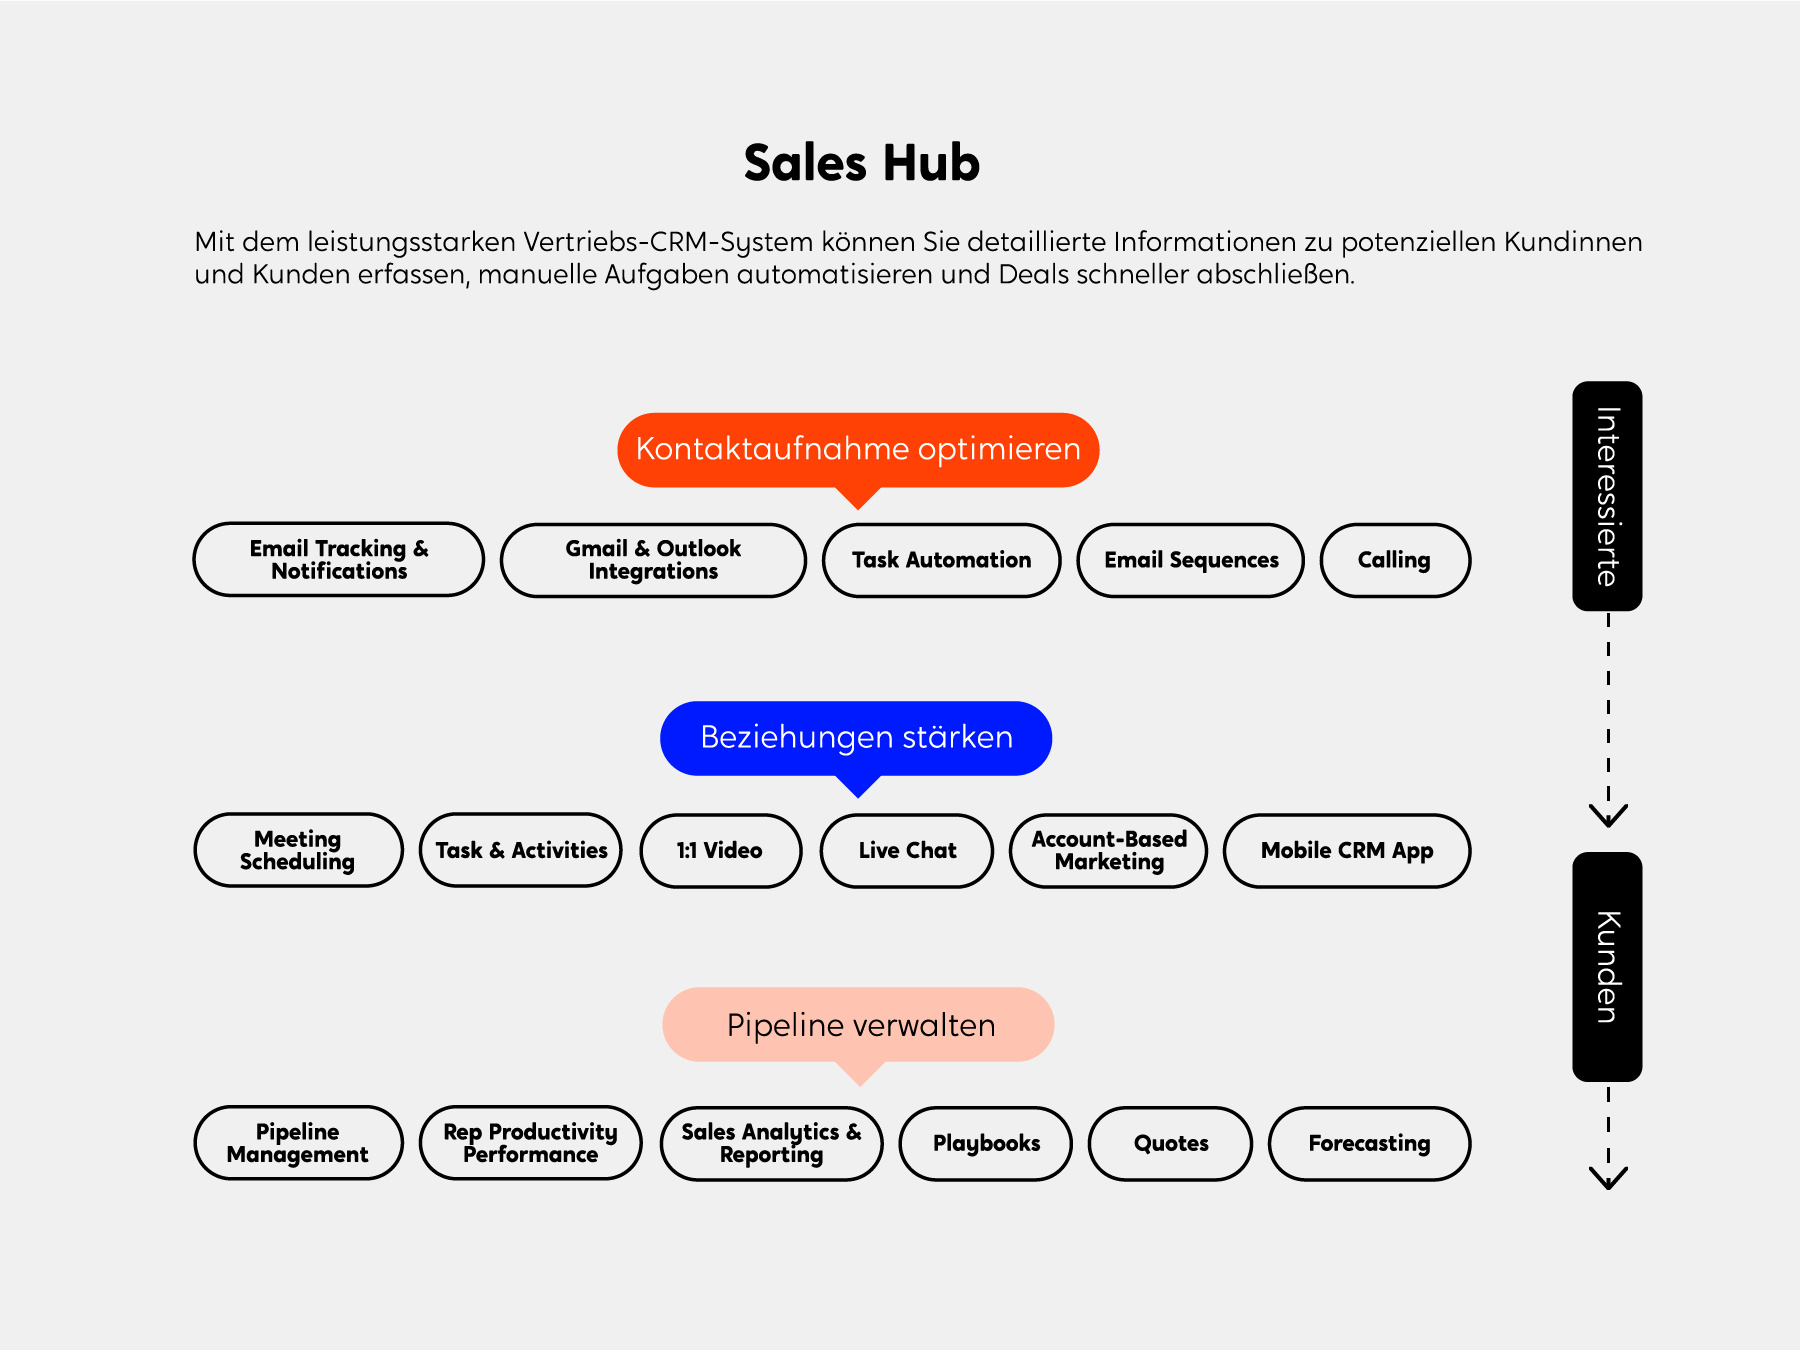 Sales Hub